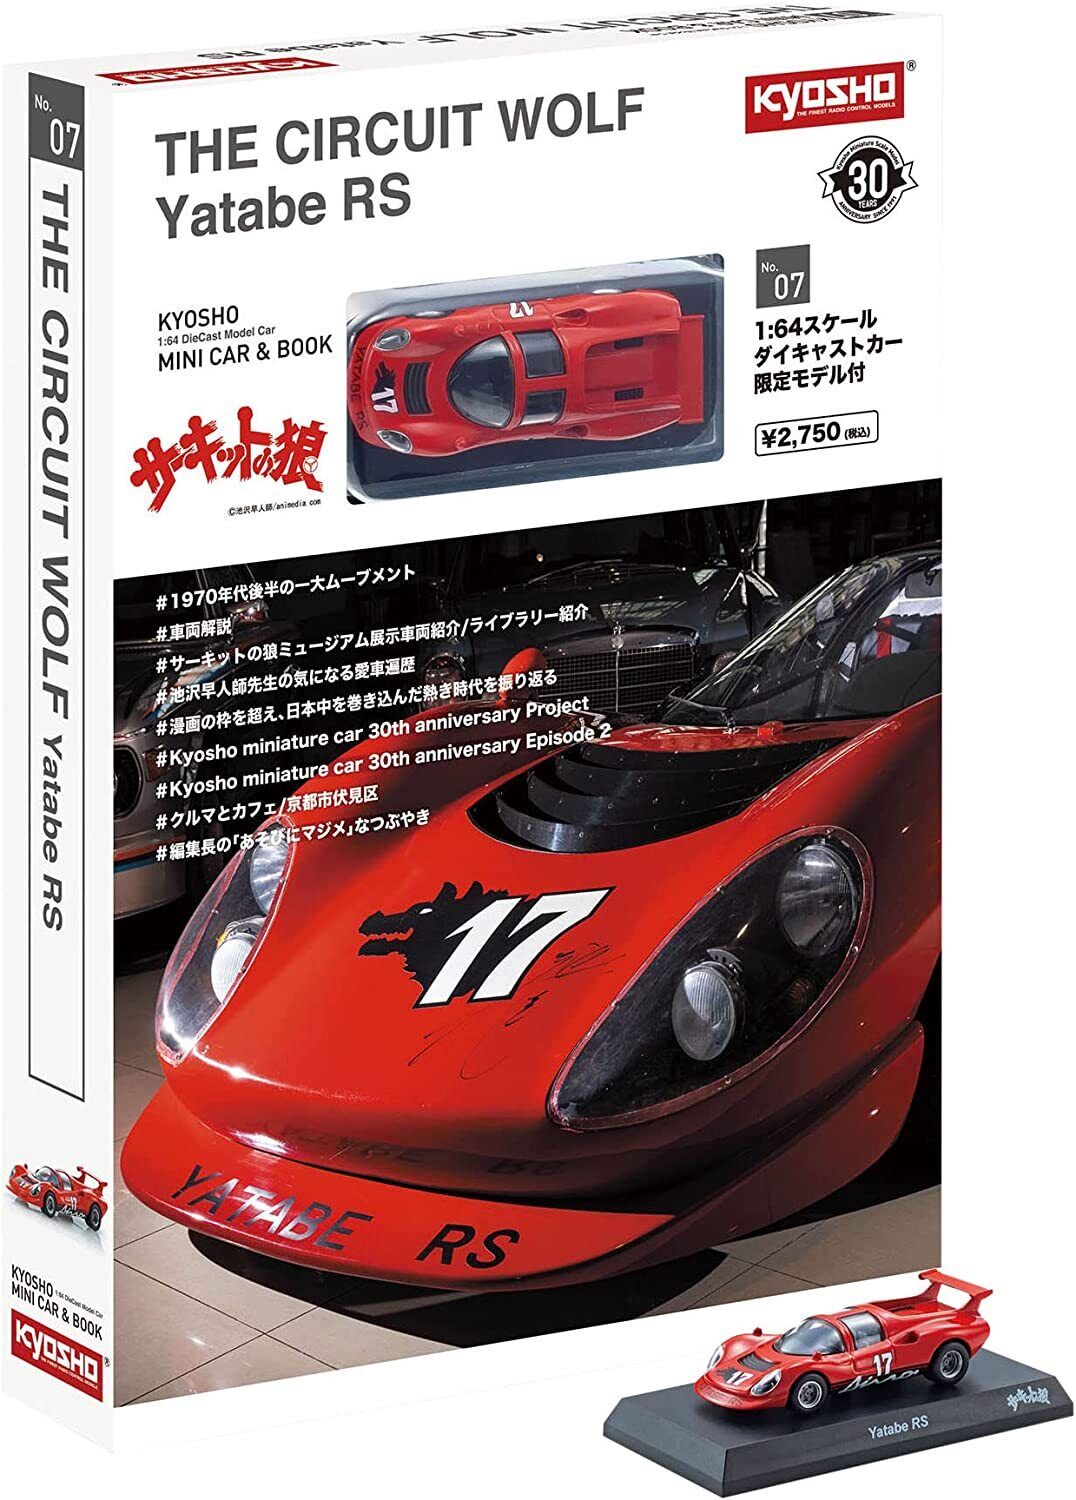 Kyosho Mini Auto & Libro No.07 1/64 Circuito Lupo Yatabe Rs K07009YK